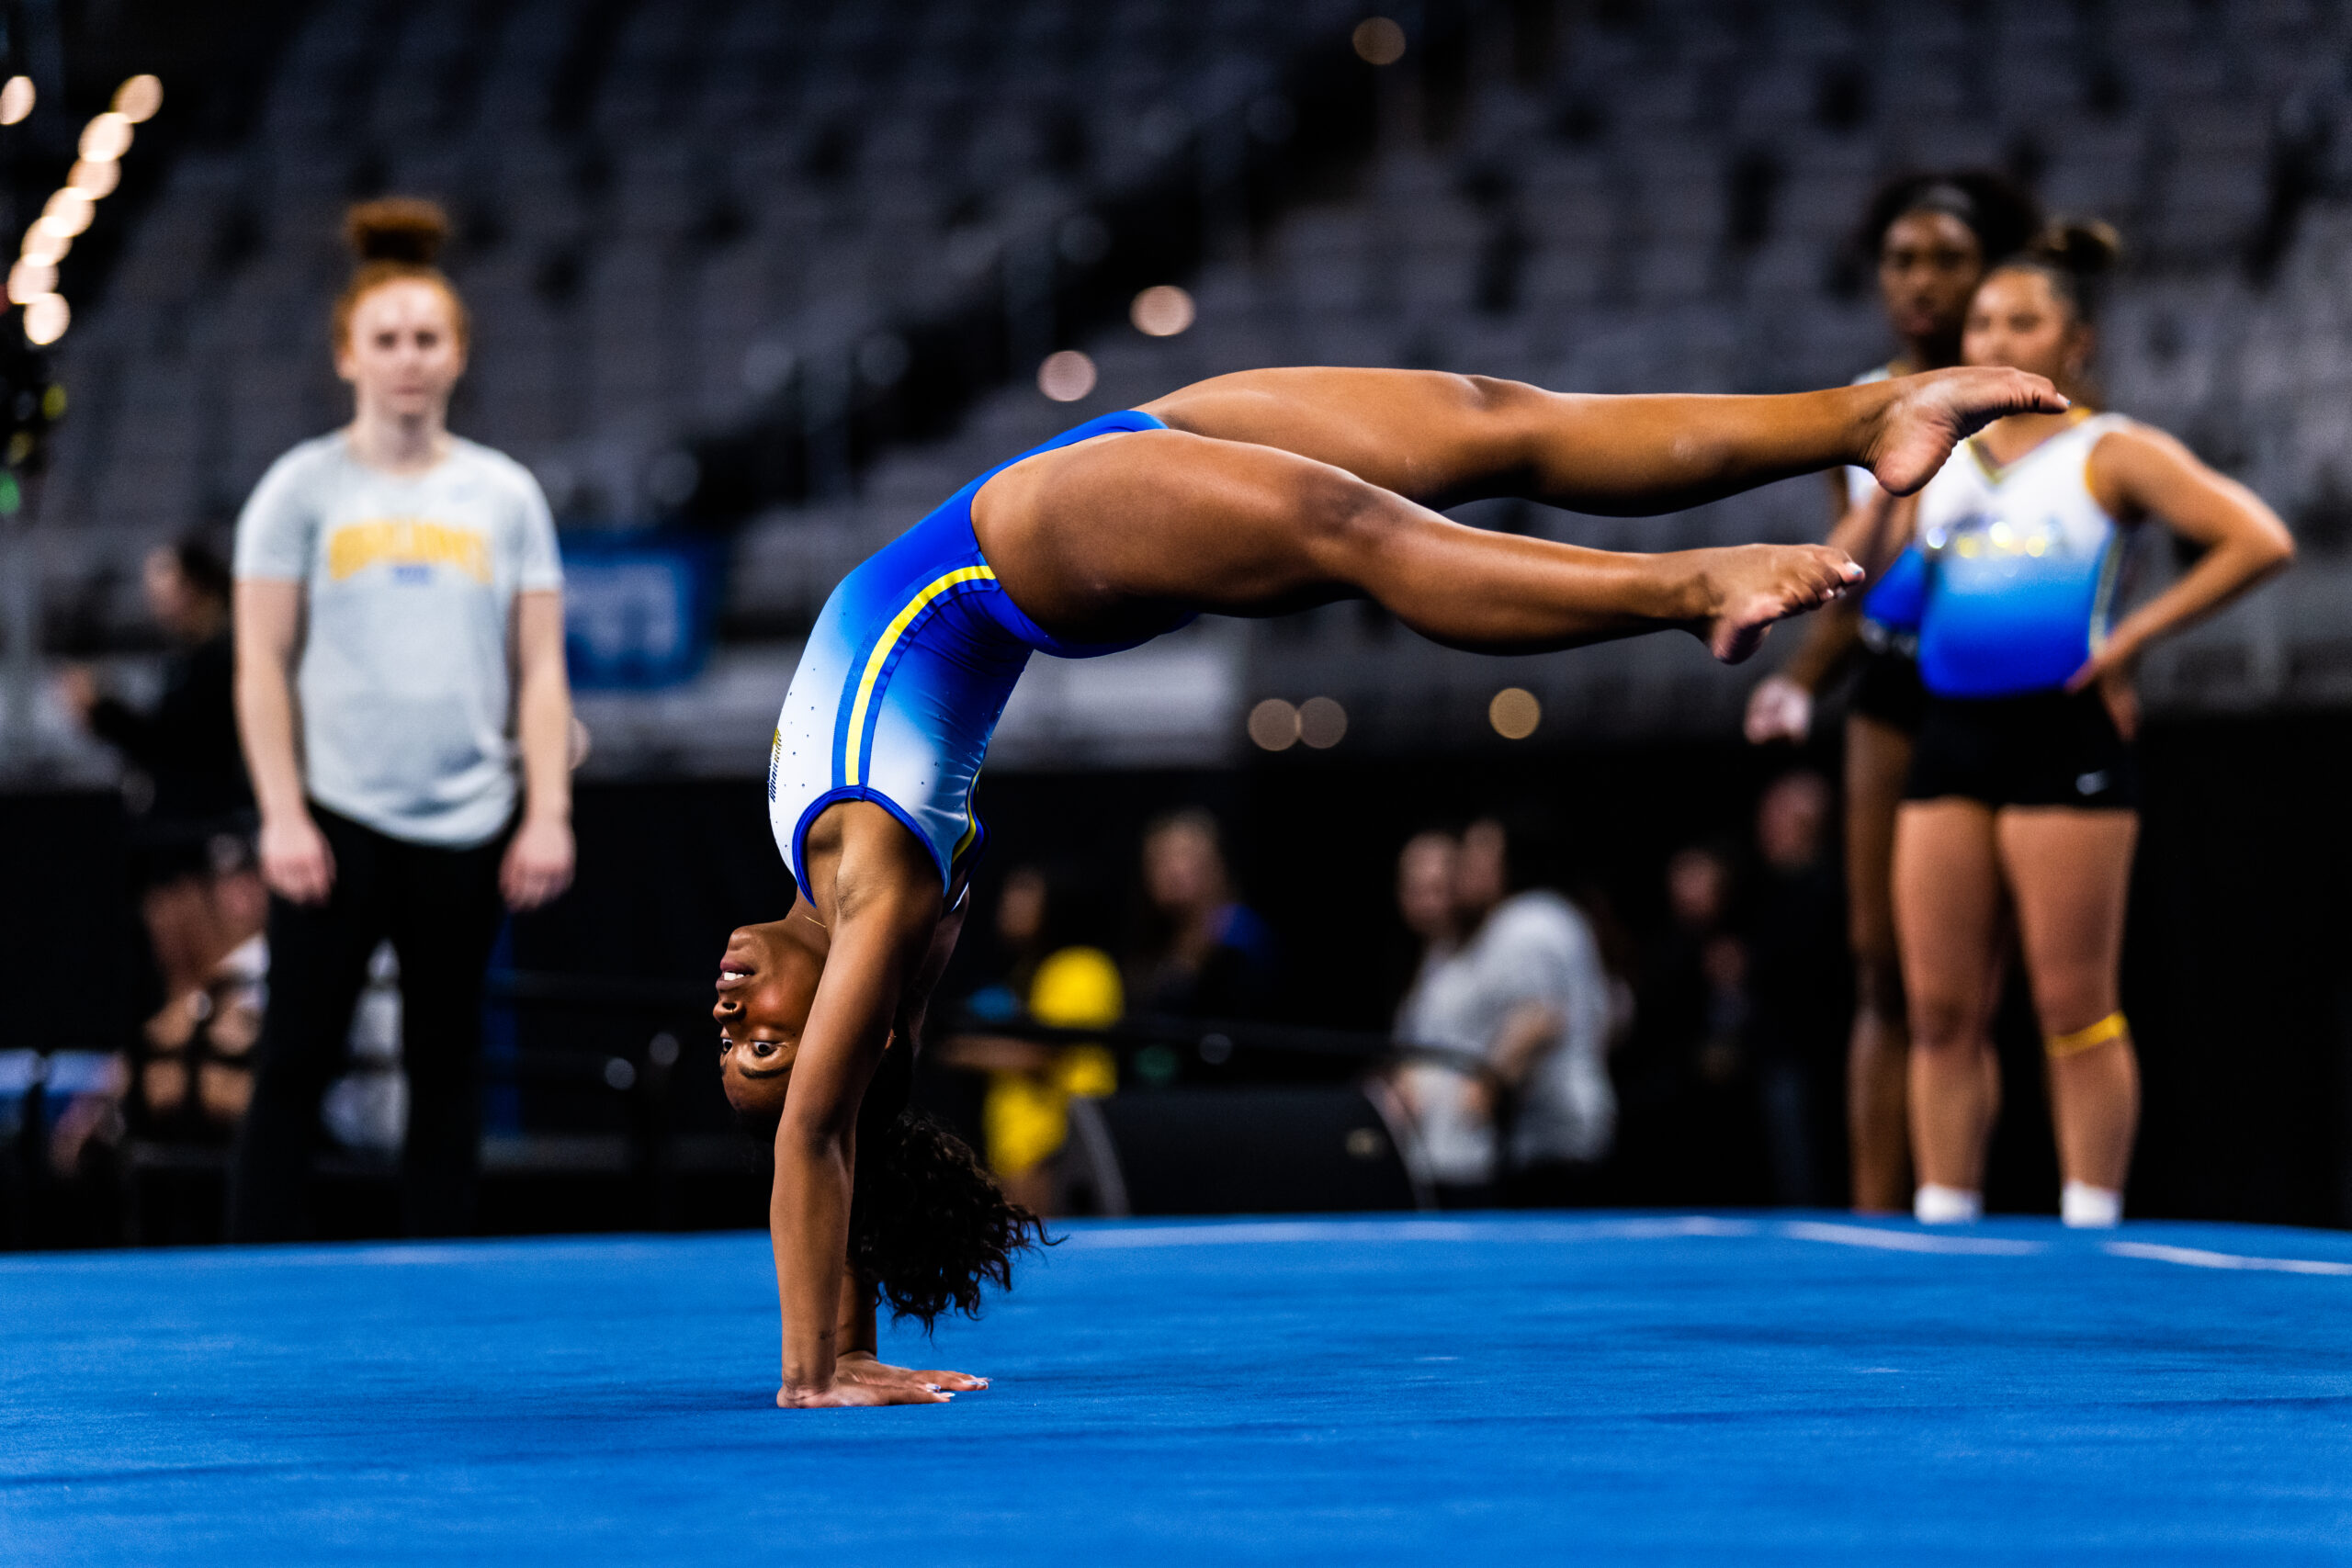 UCLA's Selena Harris on floor during podium training at the 2023 NCAA Women's Gymnastics Championships.